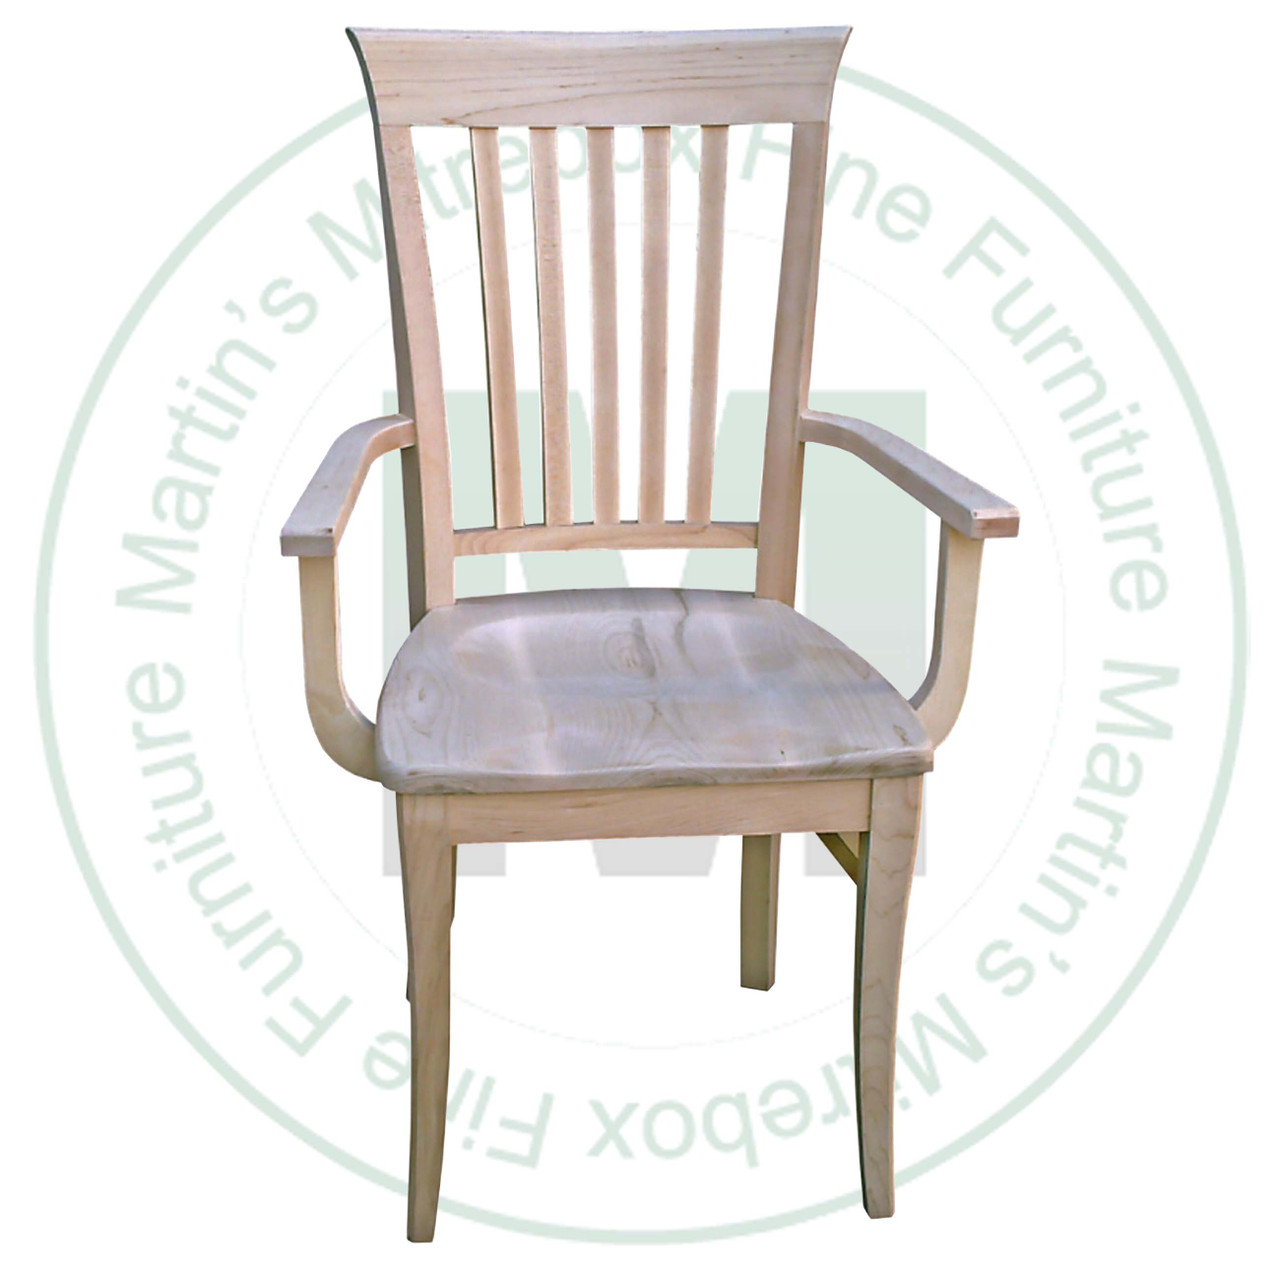 Oak Trent Arm Chair Has Wood Seat